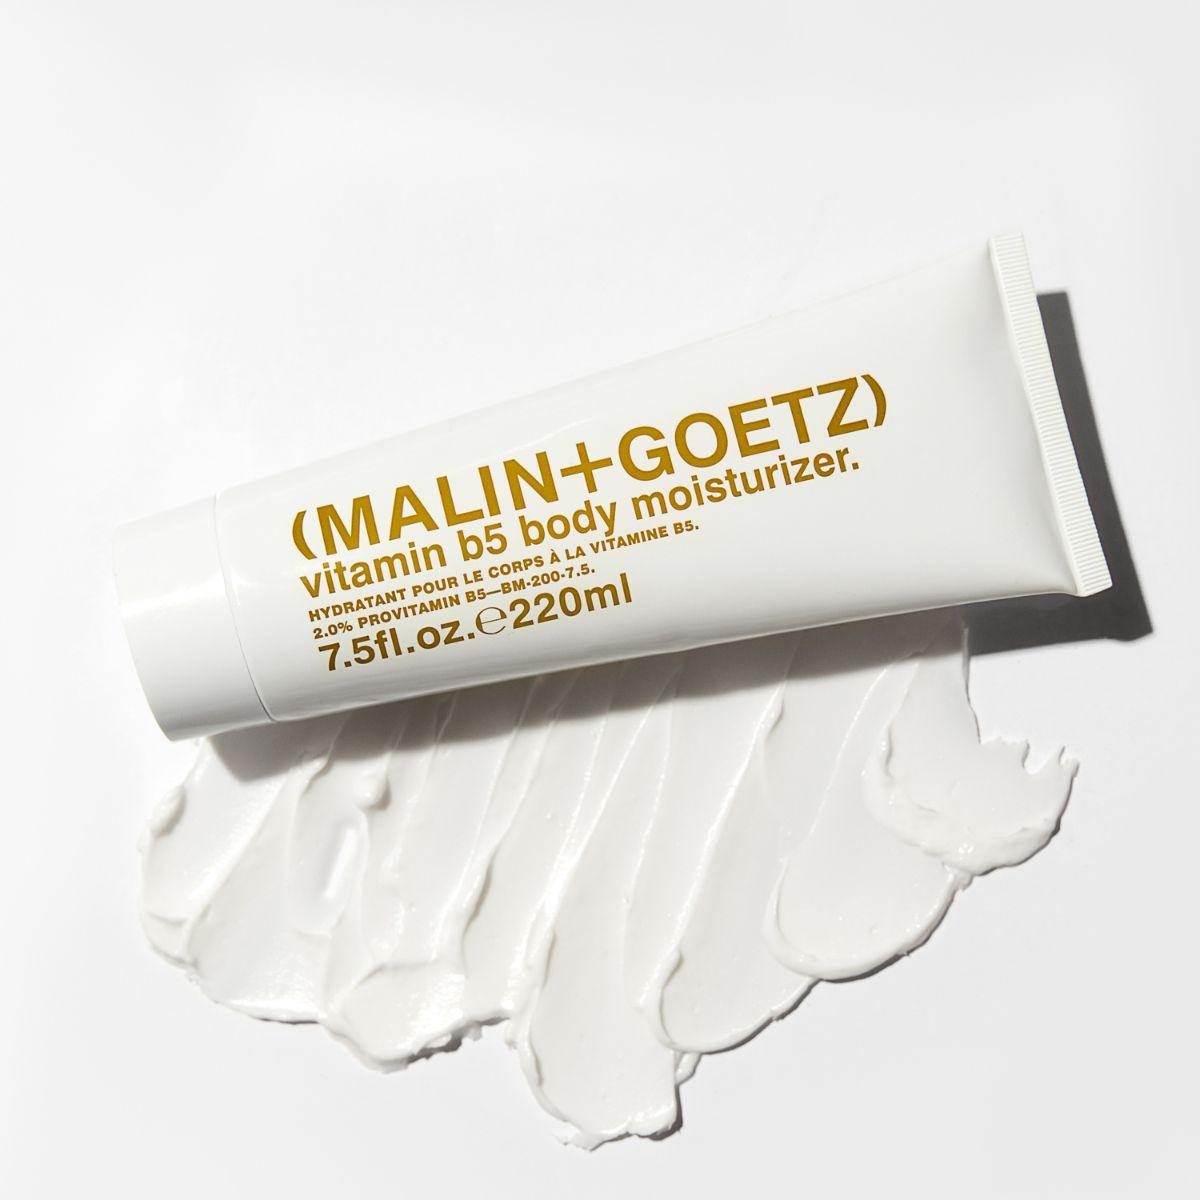 Malin+Goetz - Vitamin b5 body moisturizer